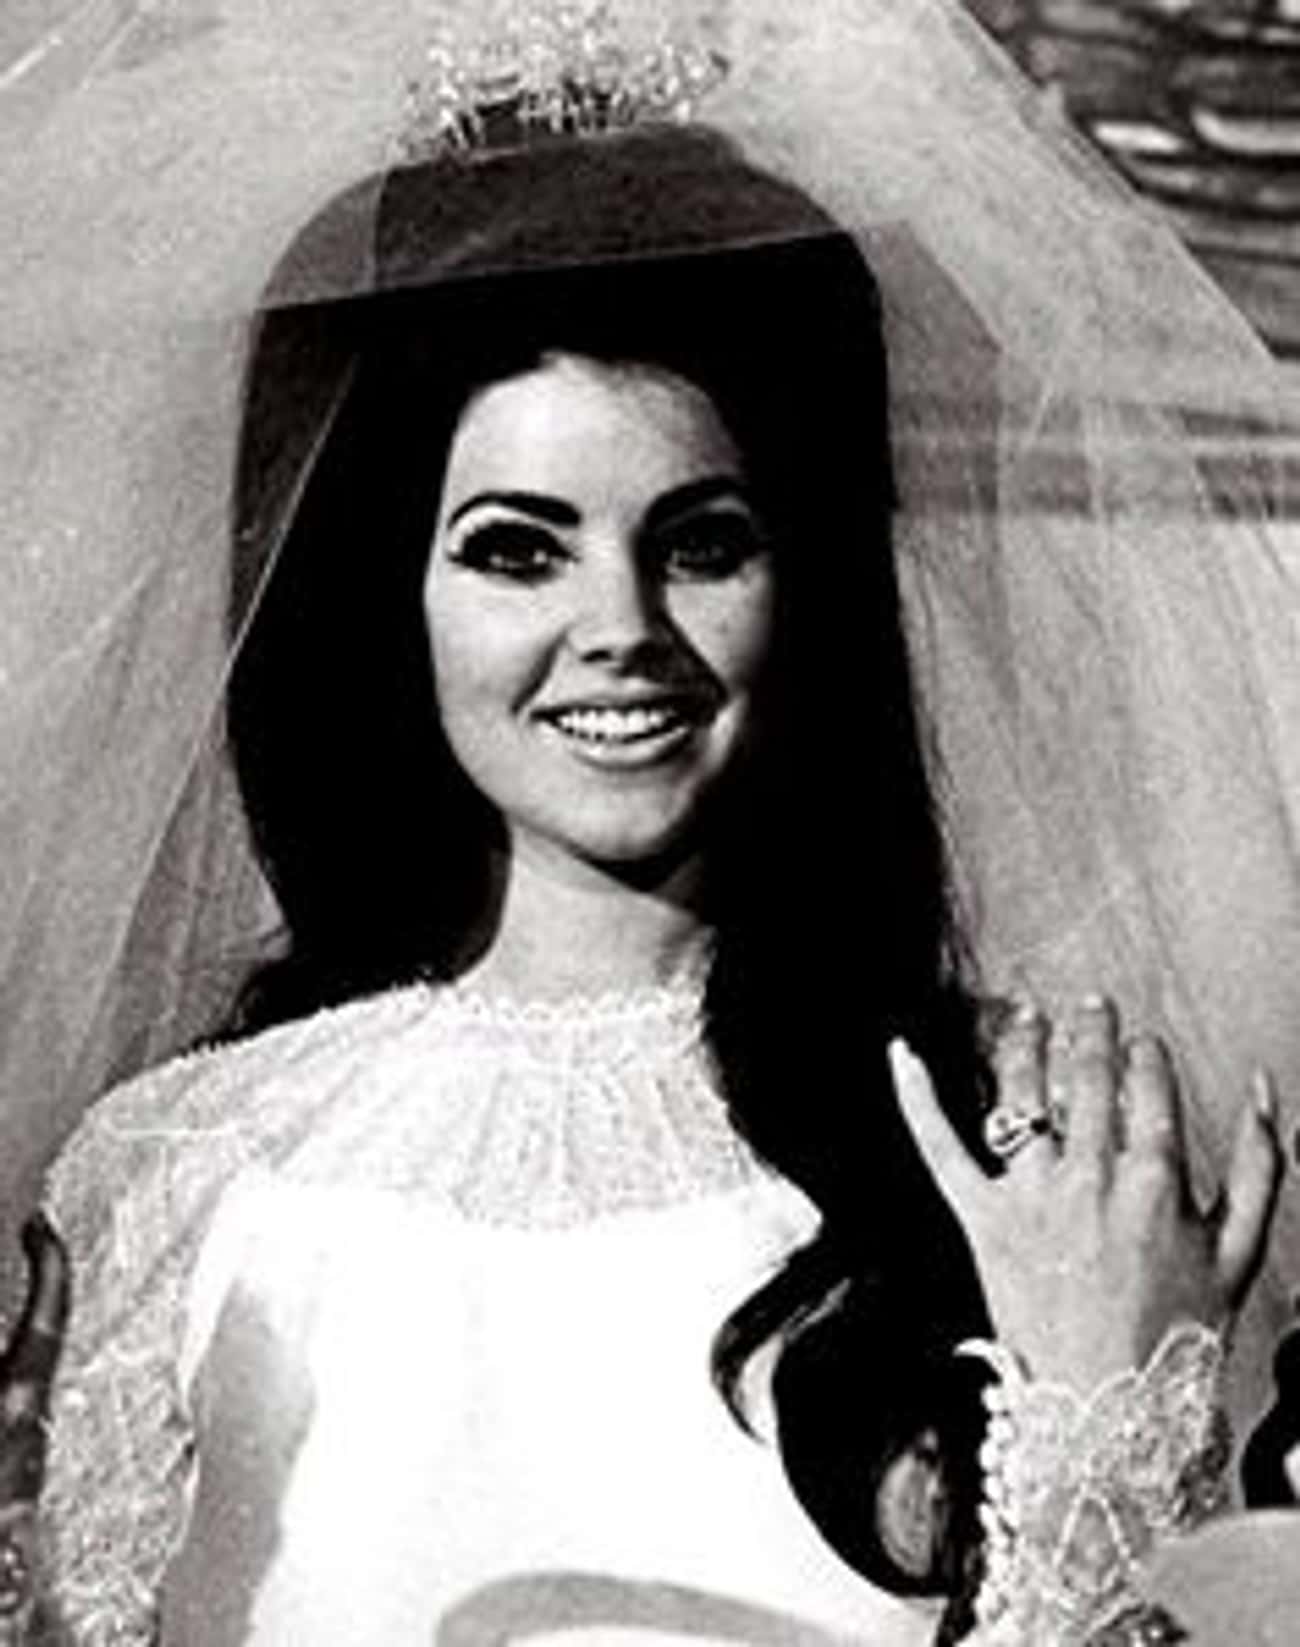 Young Priscilla Presley in a Wedding Dress